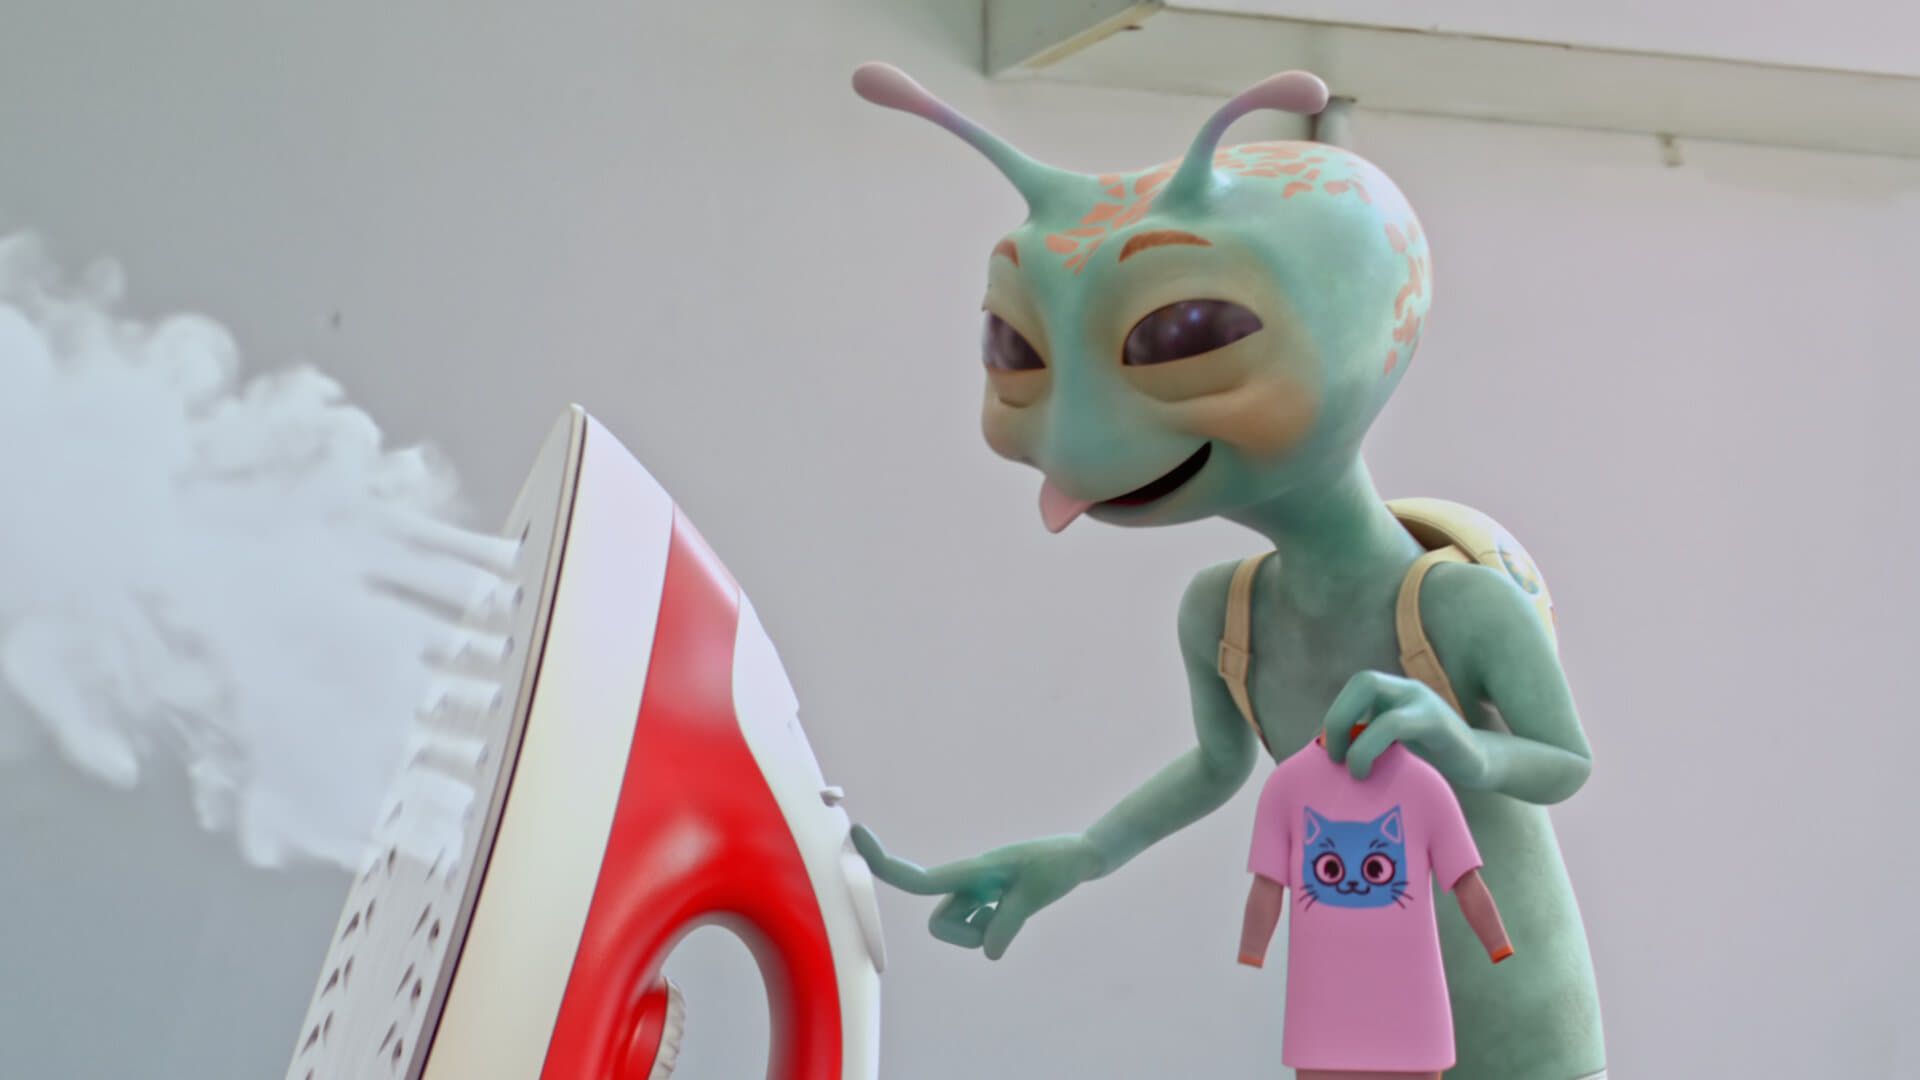 Watch Alien TV · Season 1 Episode 12 · Toyshop/Laundromat/Yoga Full Episode  Online - Plex